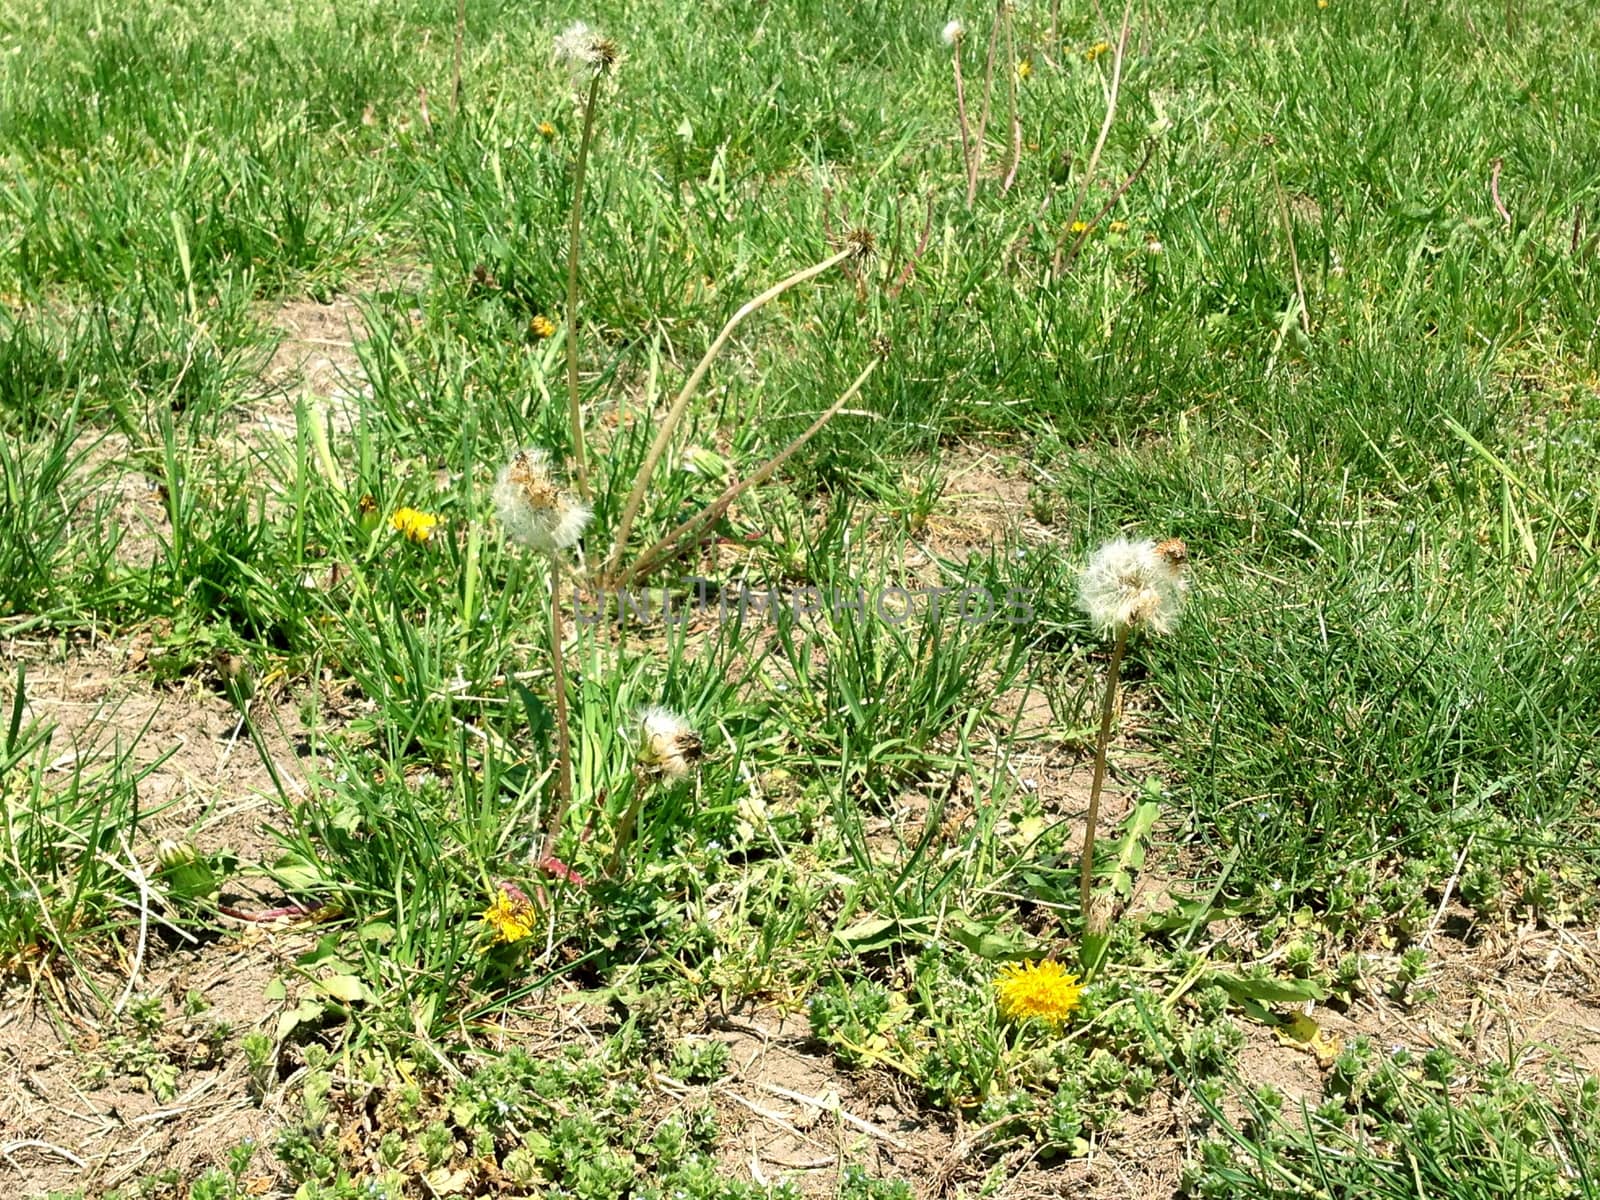 Dandelions in Grass by the_jade_greene